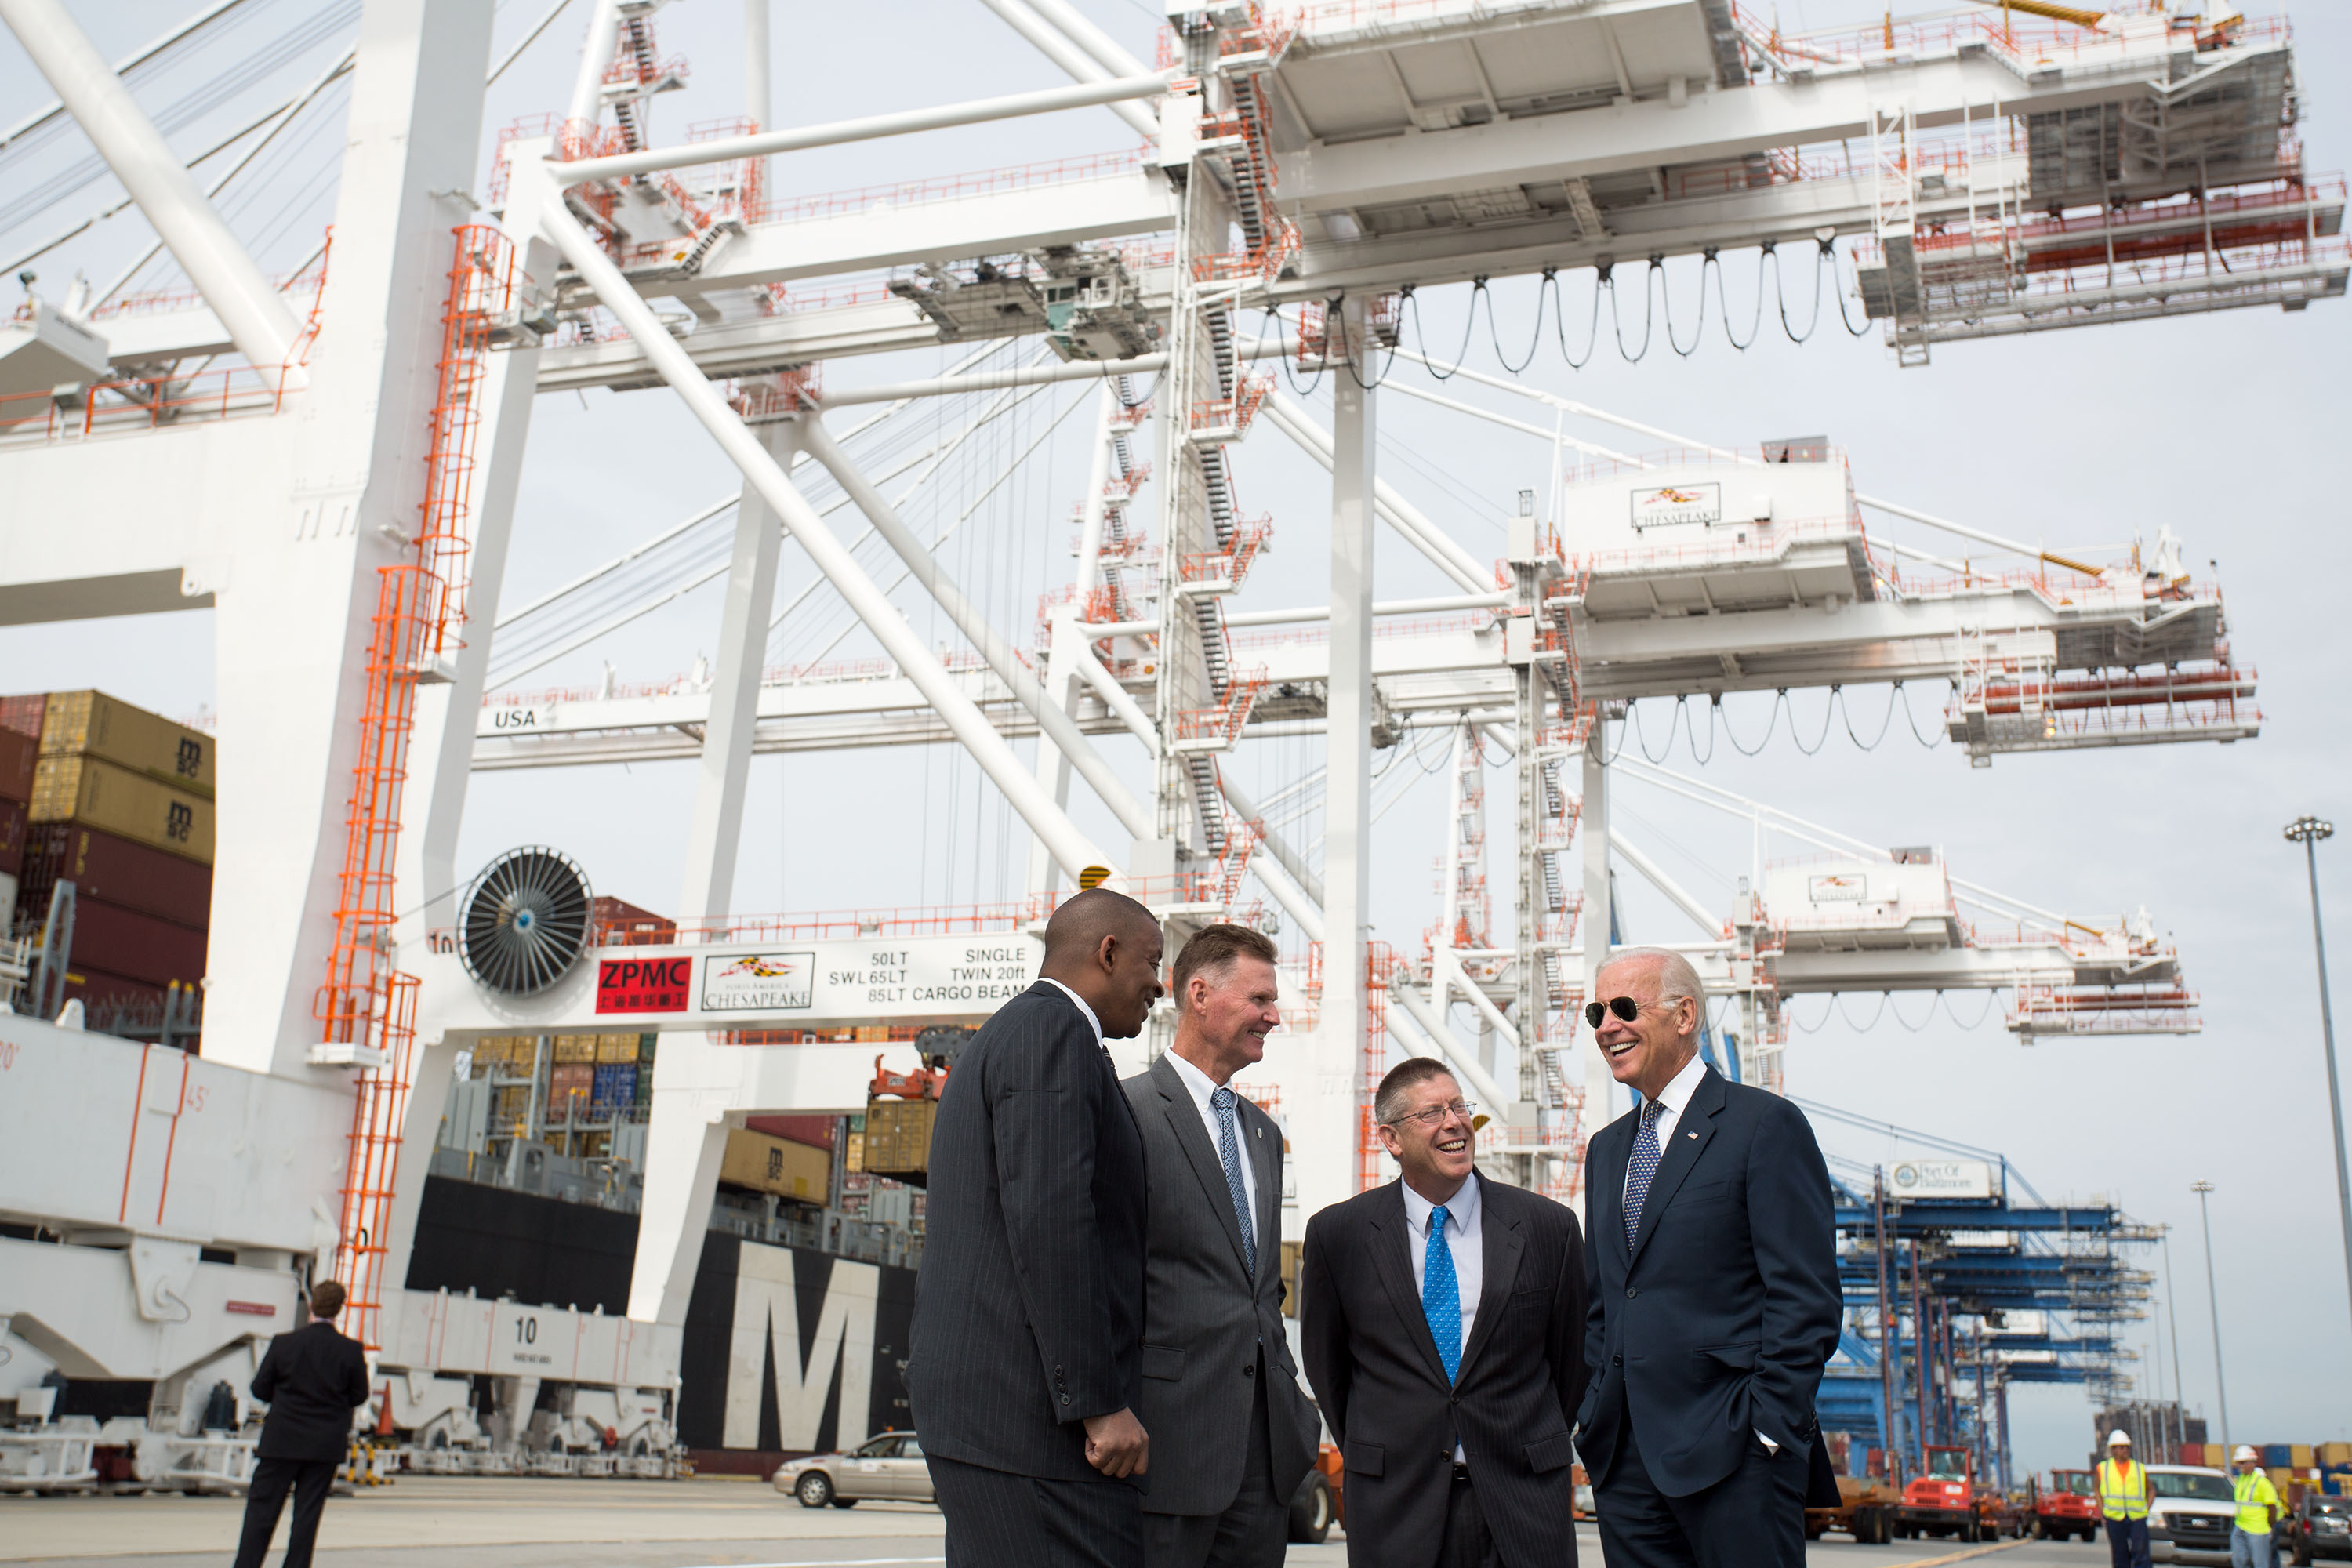 Vice President Biden at the Port of Baltimore (Sept. 9, 2013)